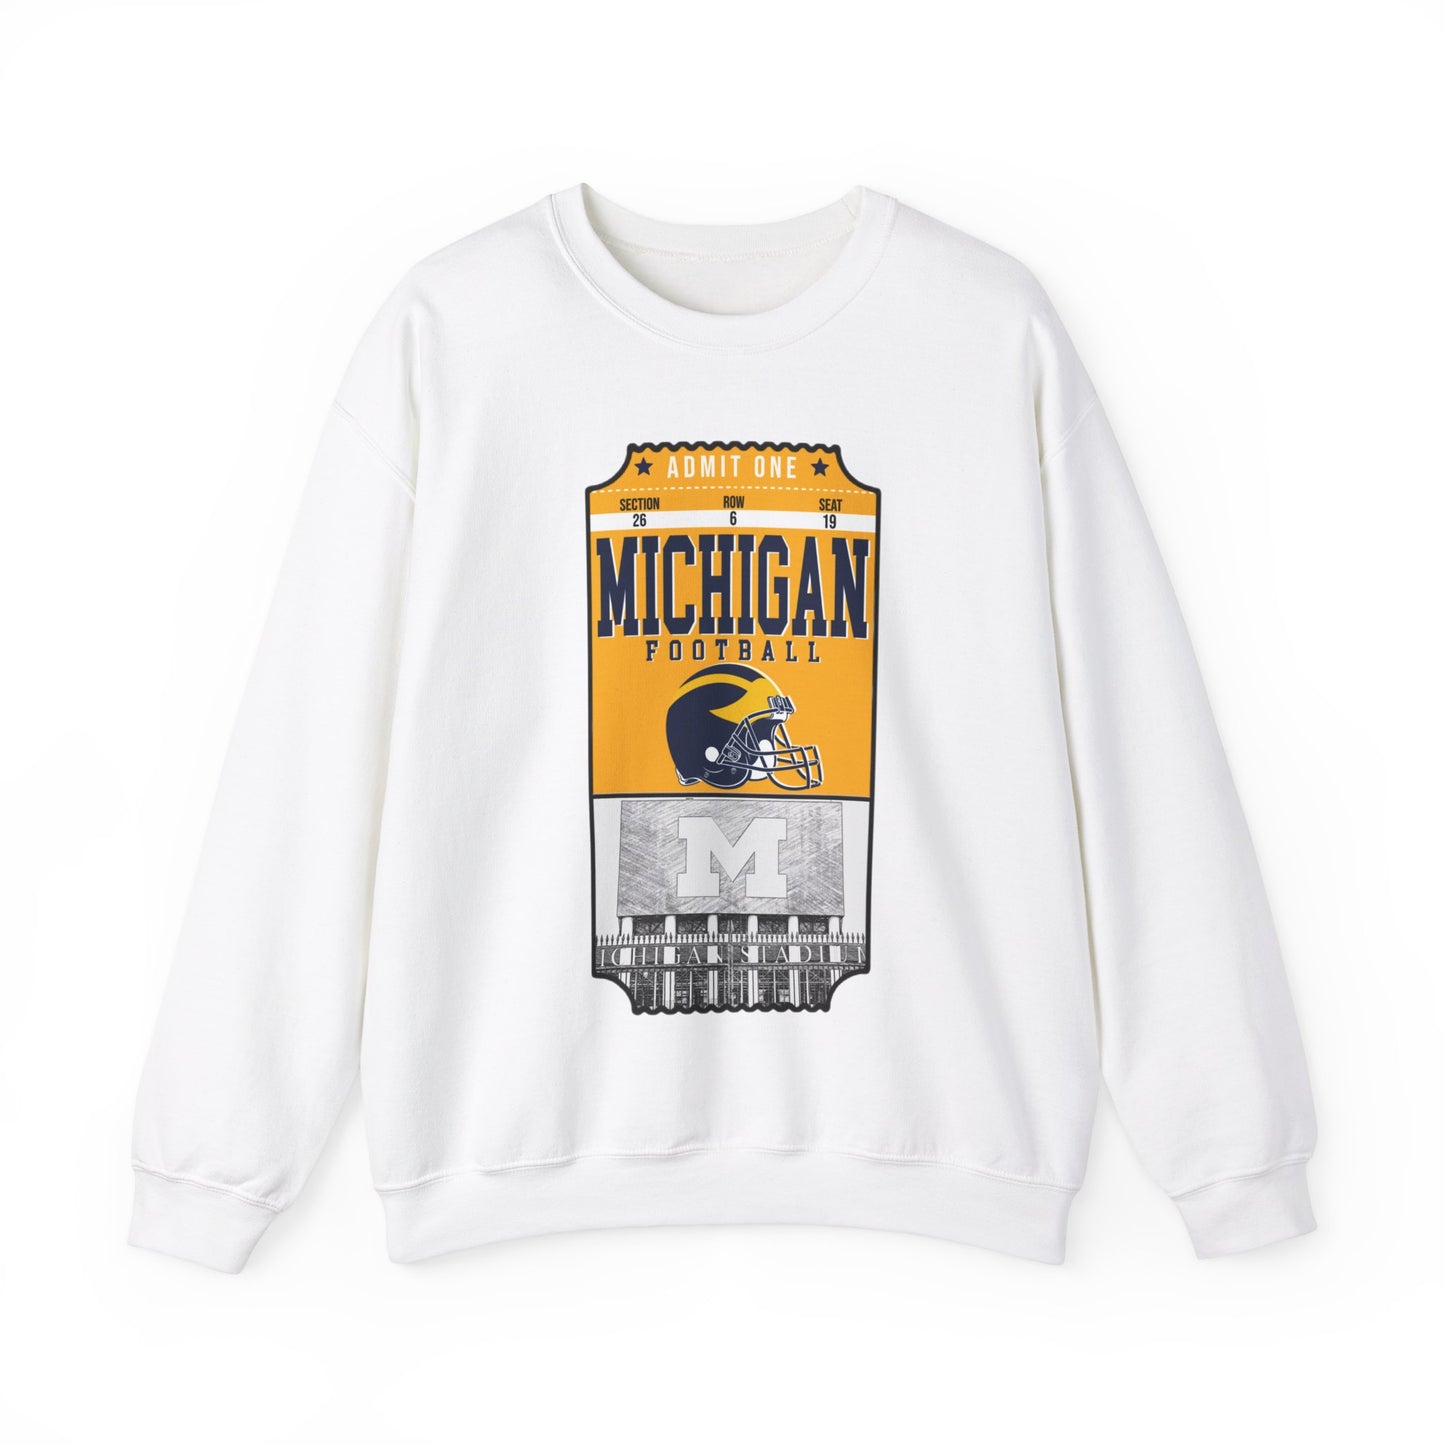 Michigan Football Sweatshirt